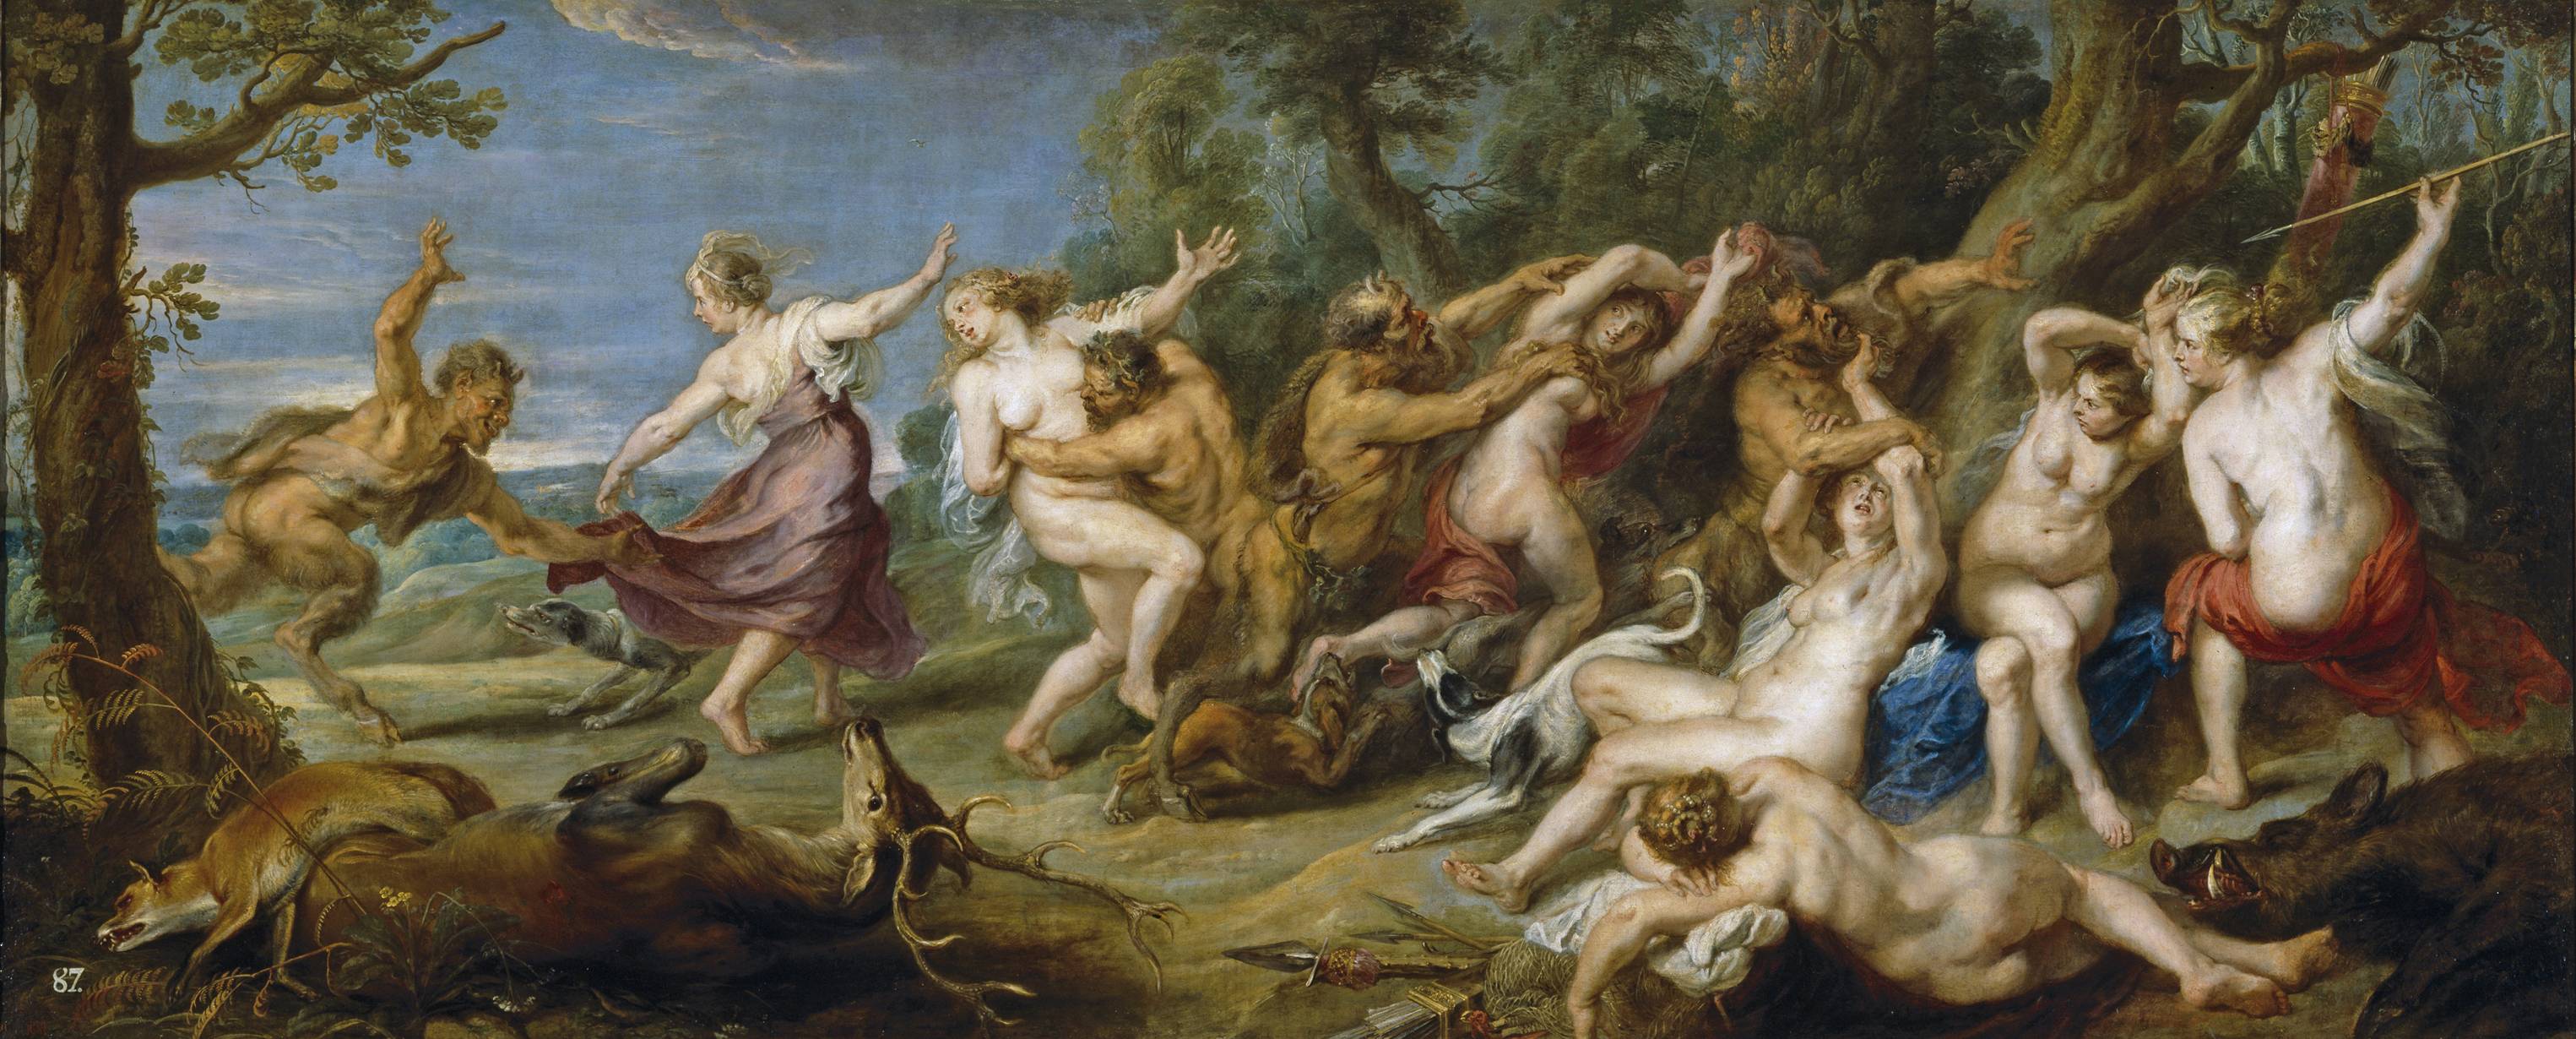 Peter Paul Rubens (1640)